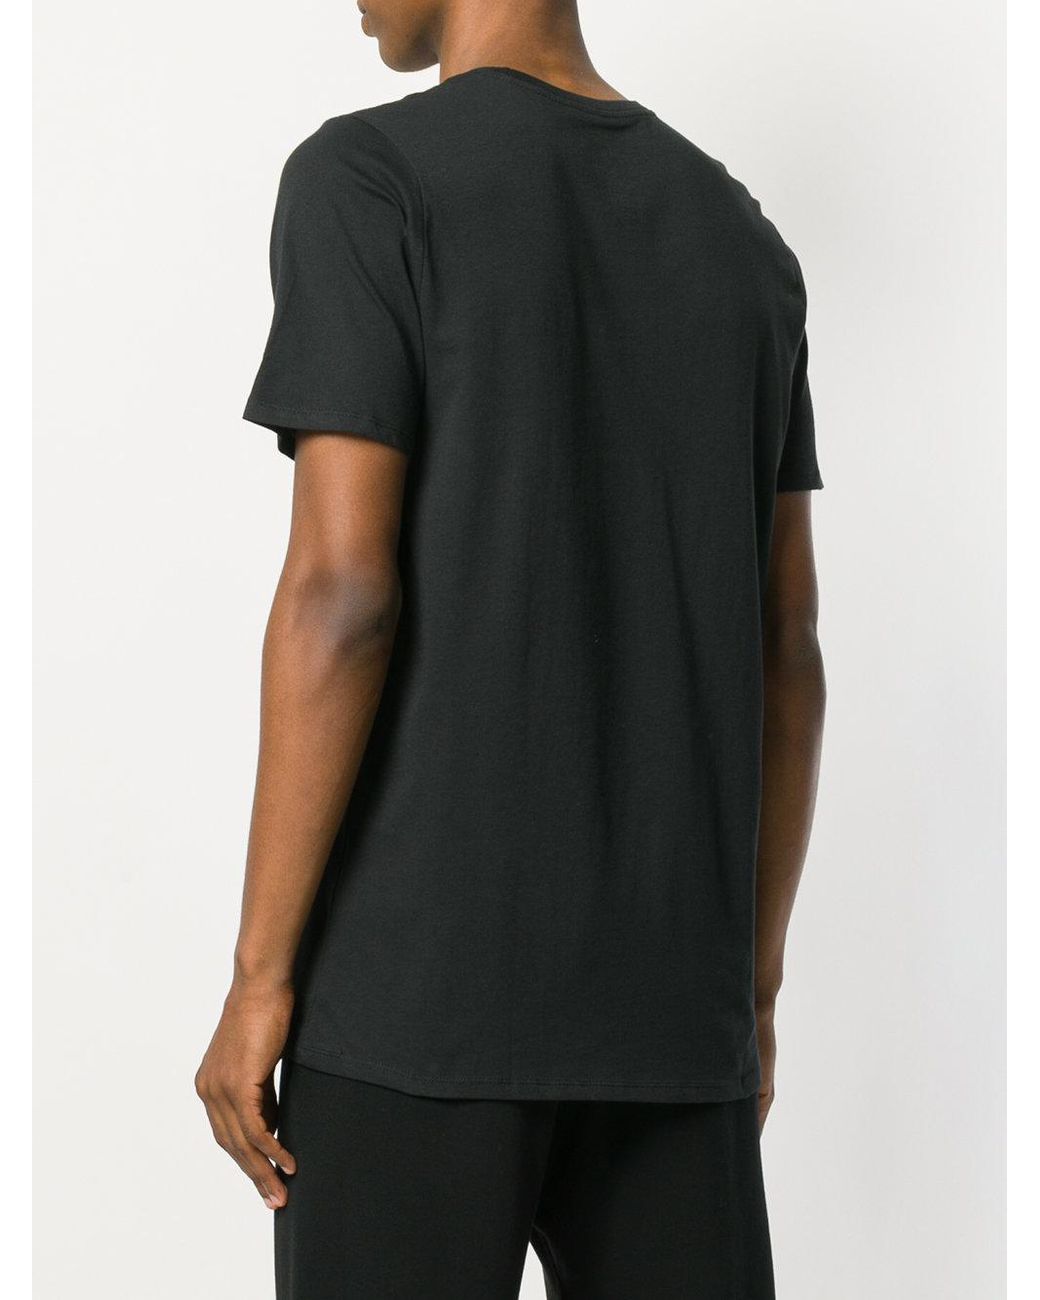 Nike Cotton More Money T-shirt in Black for Men | Lyst